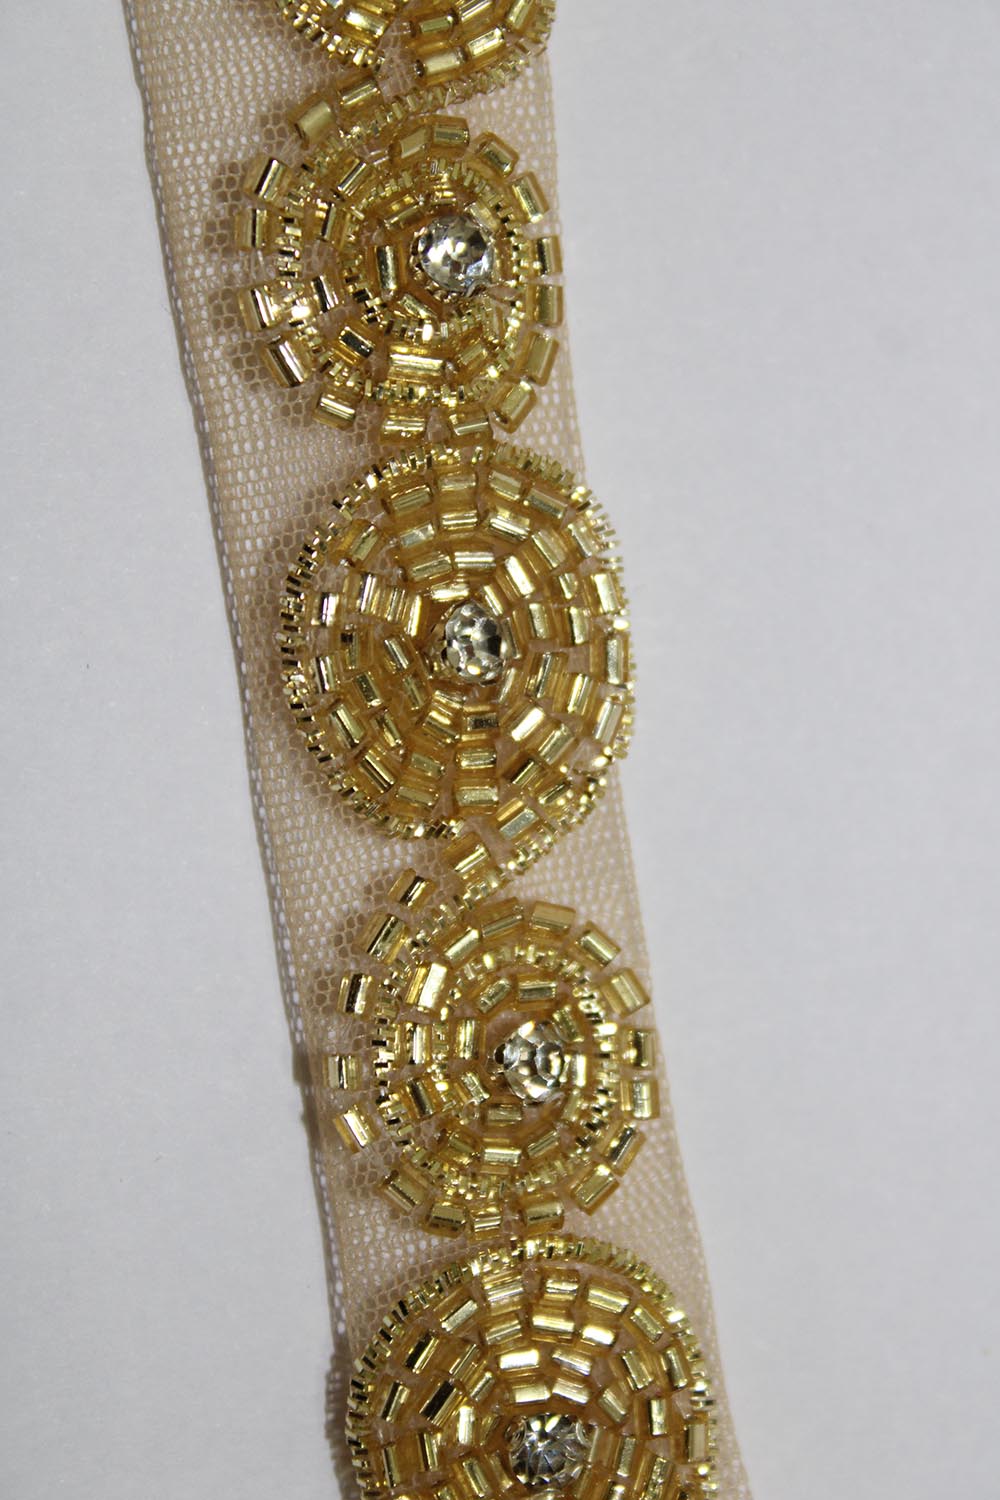 Luxurious Golden Handwork Lace: 9 Meter Roll of Exquisite Embellishments - Luxurion World